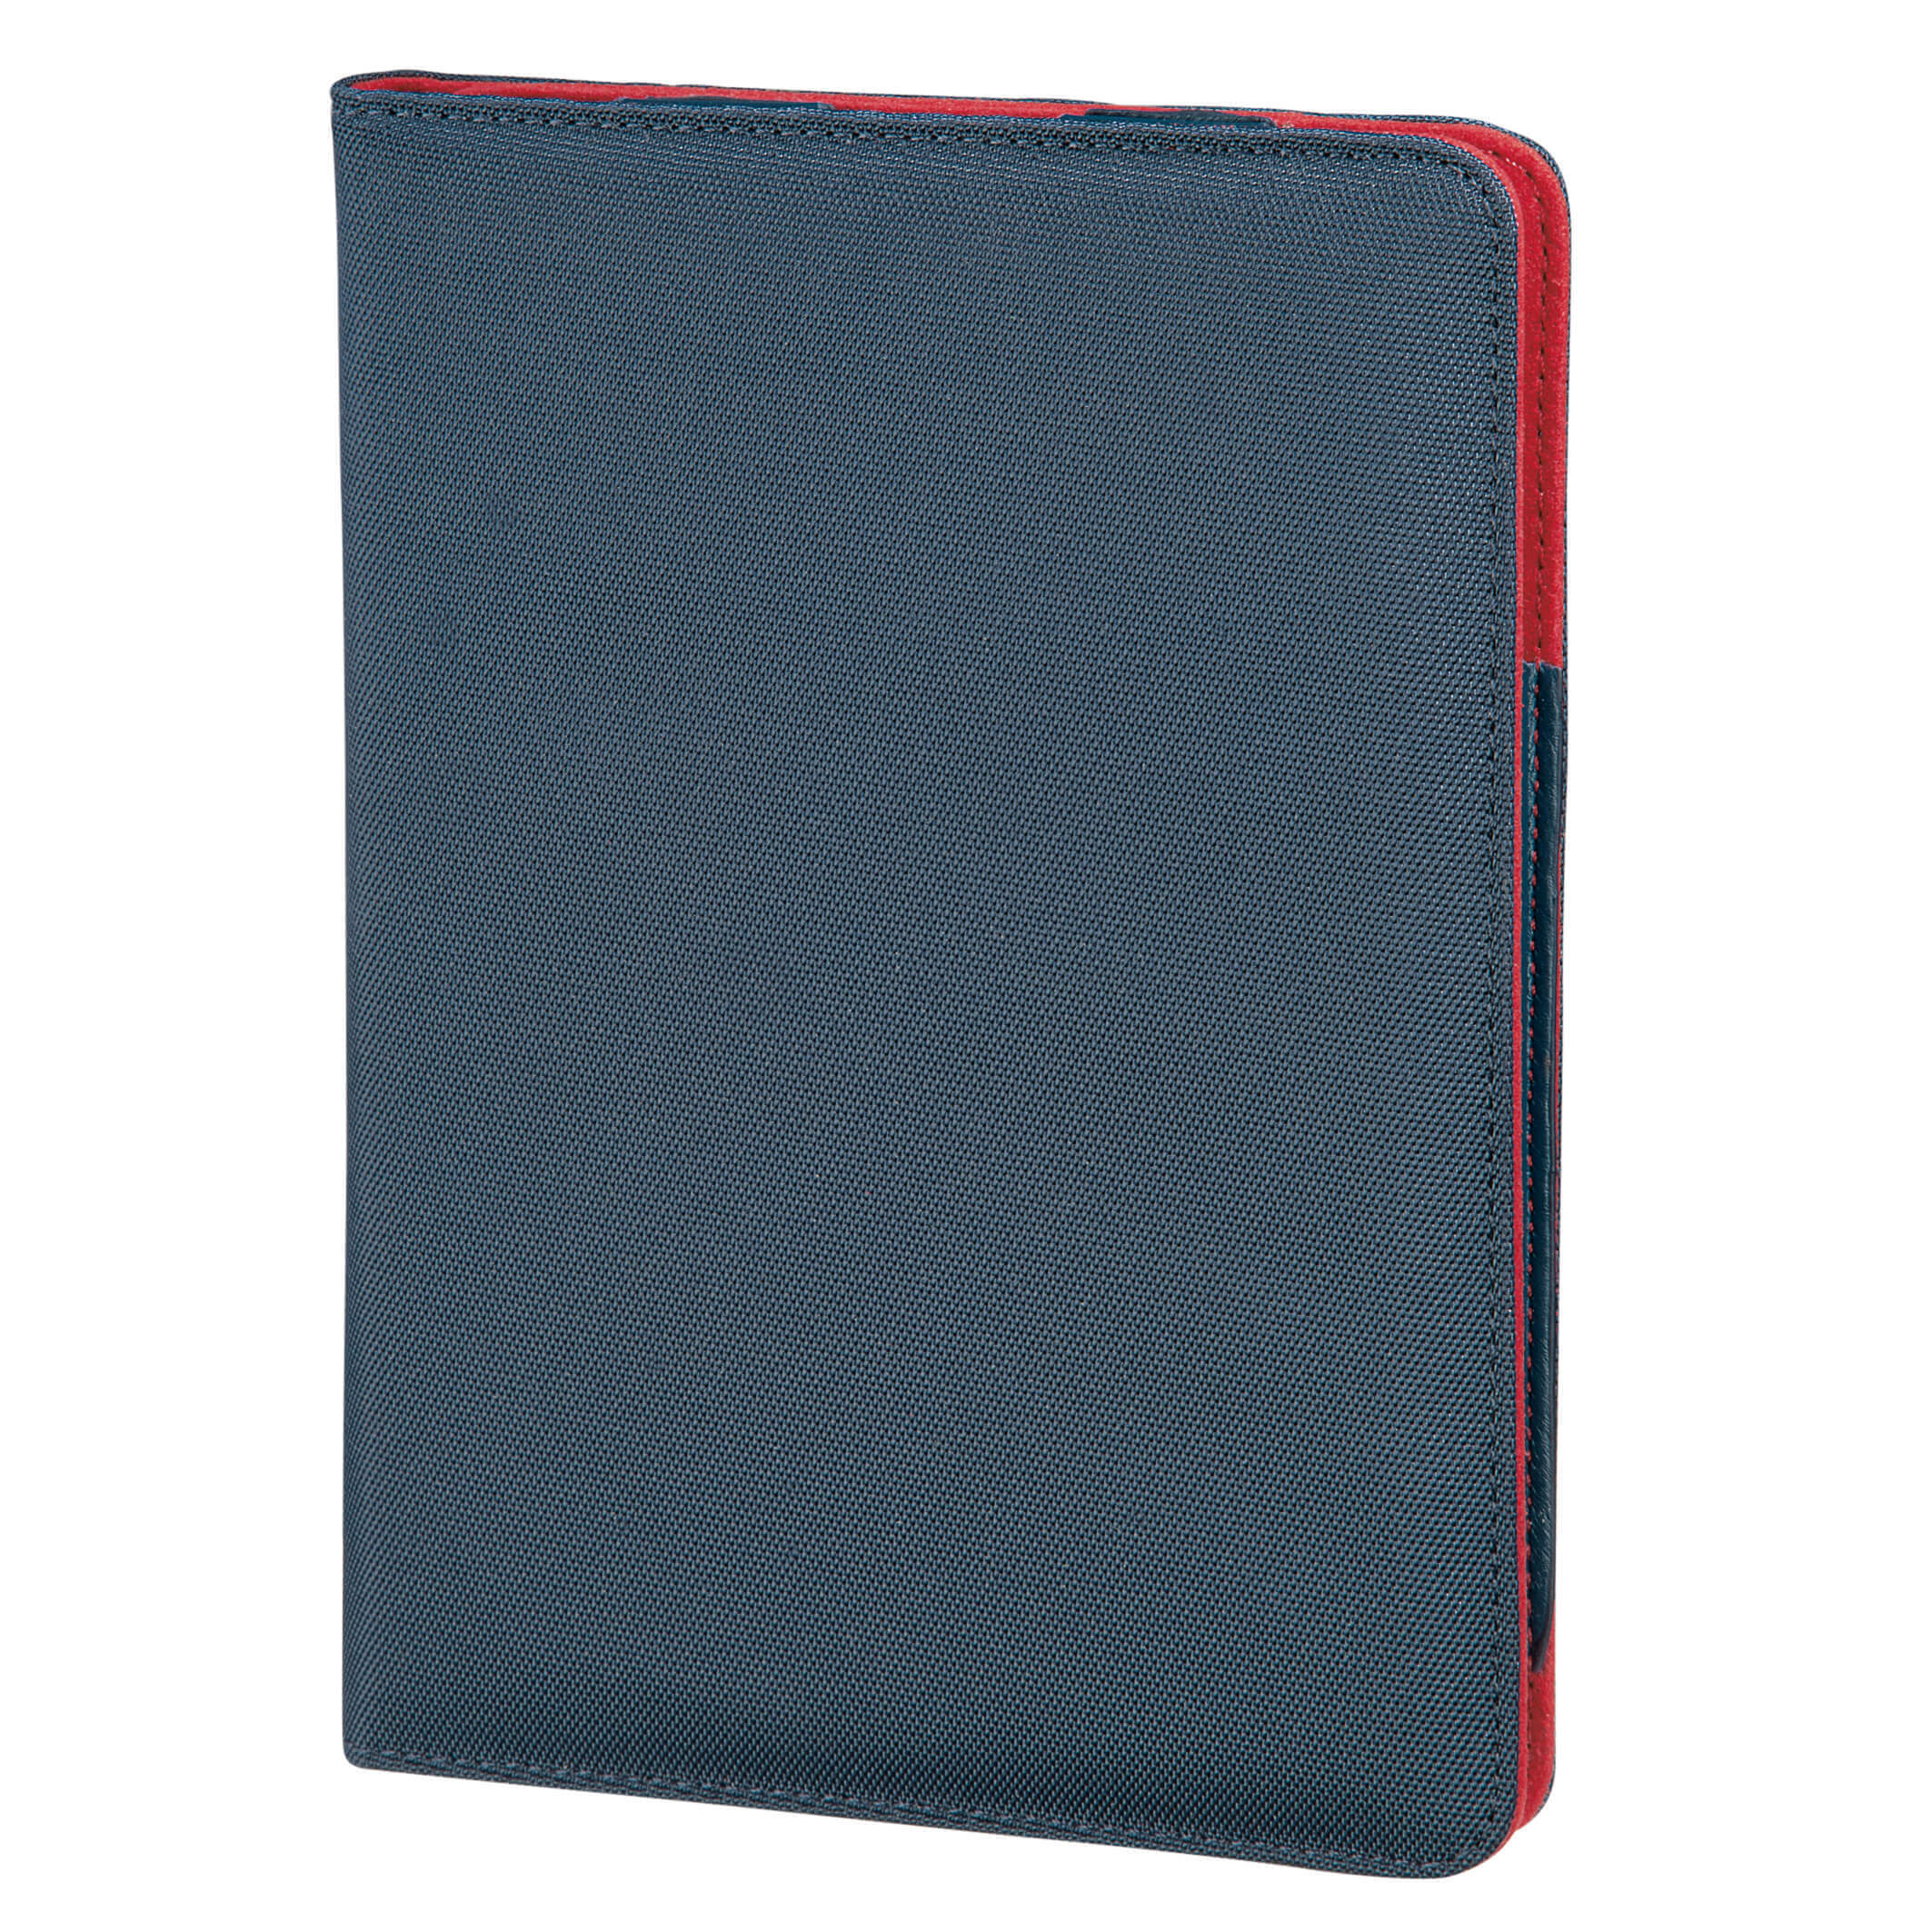 Lissabon Portfolio for Apple iPad mini, blue/red